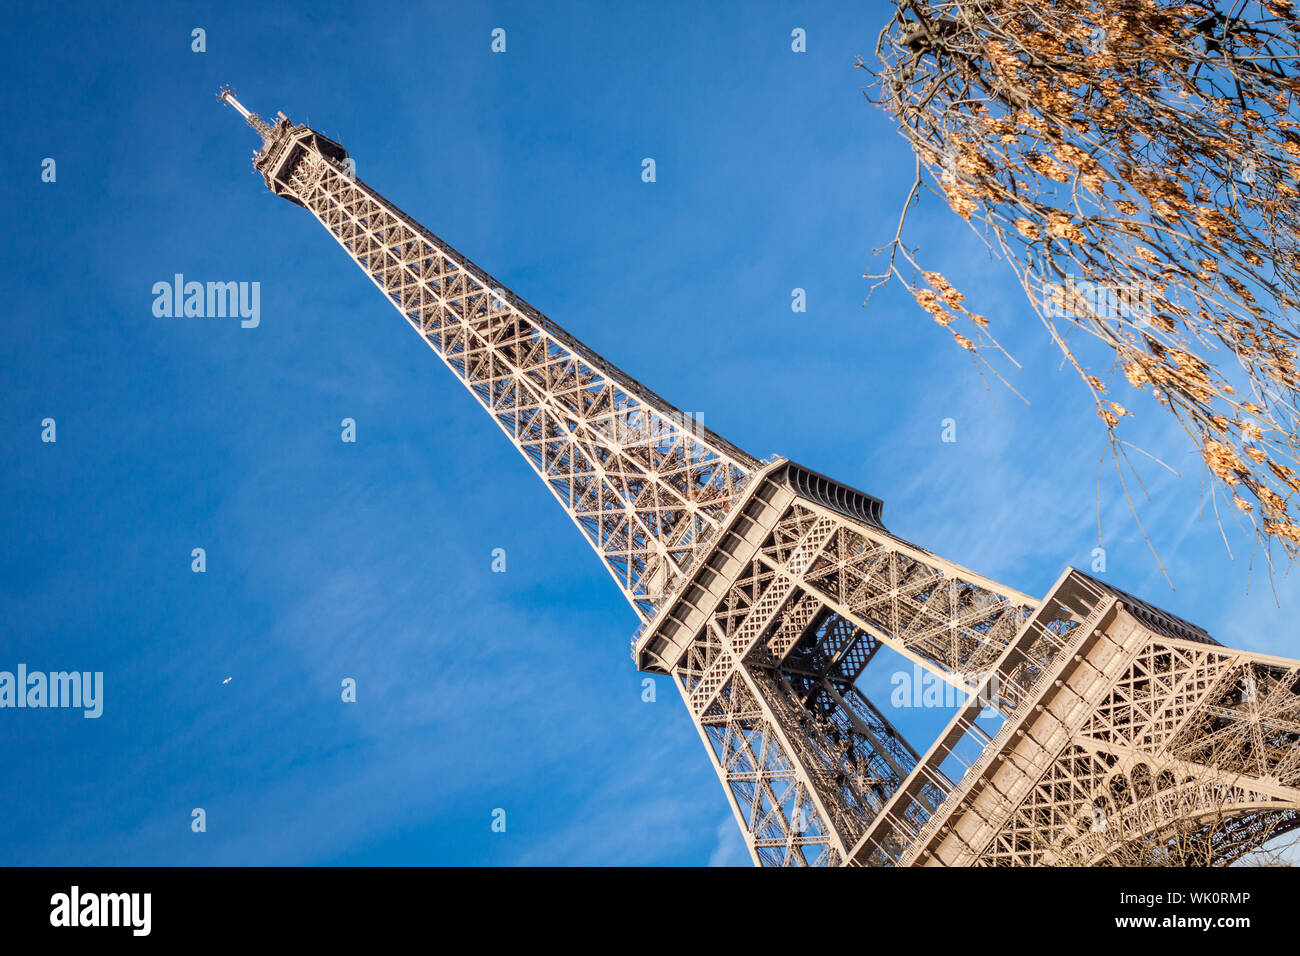 Eiffel Tower in Paris Stock Photo